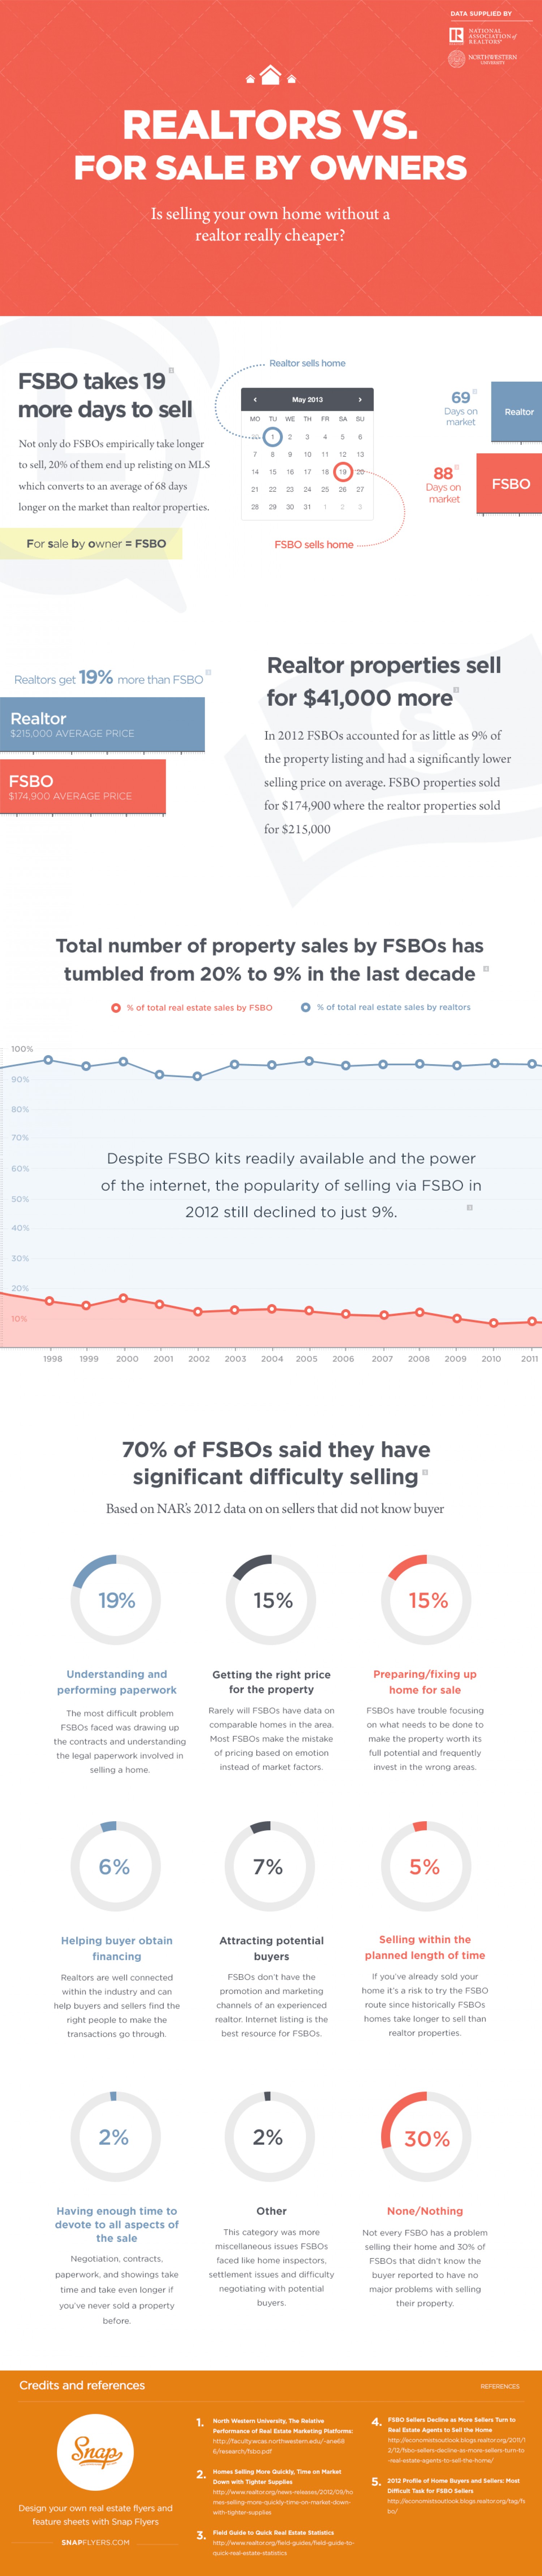 FSBO Selling versus Realtor